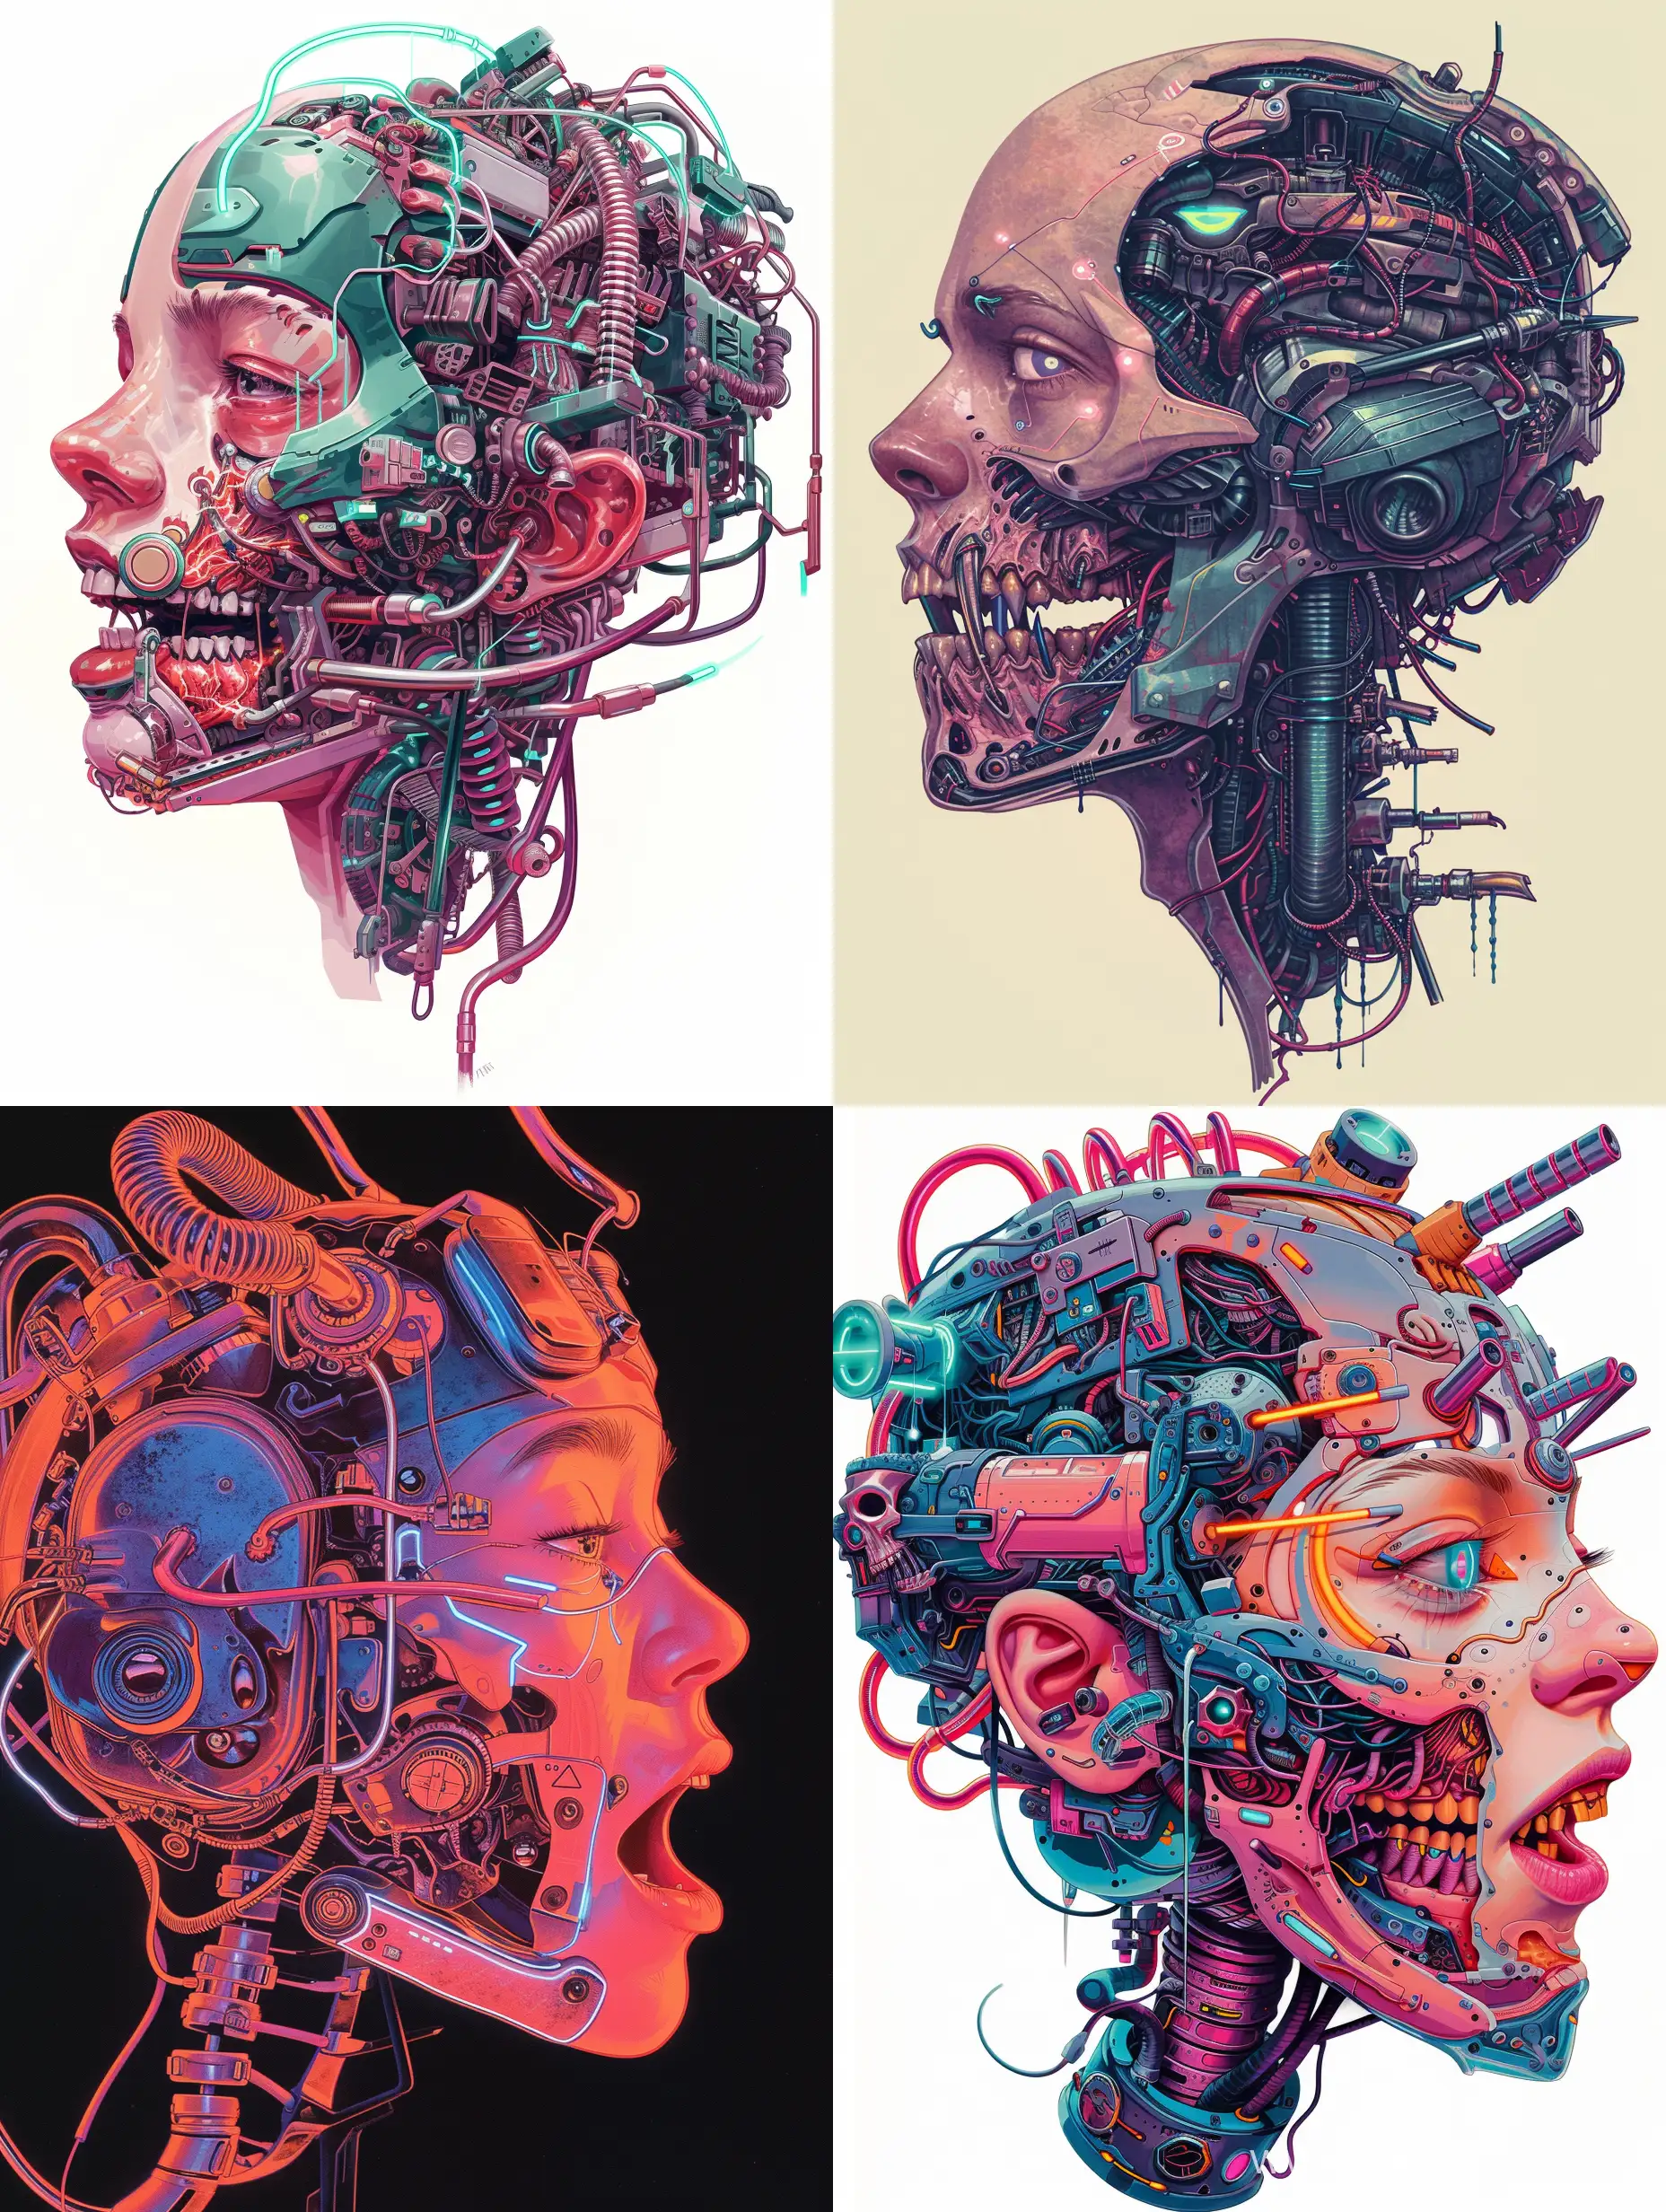 Futuristic-Cybernetic-Facial-Augmentations-and-Head-Implants-Artwork